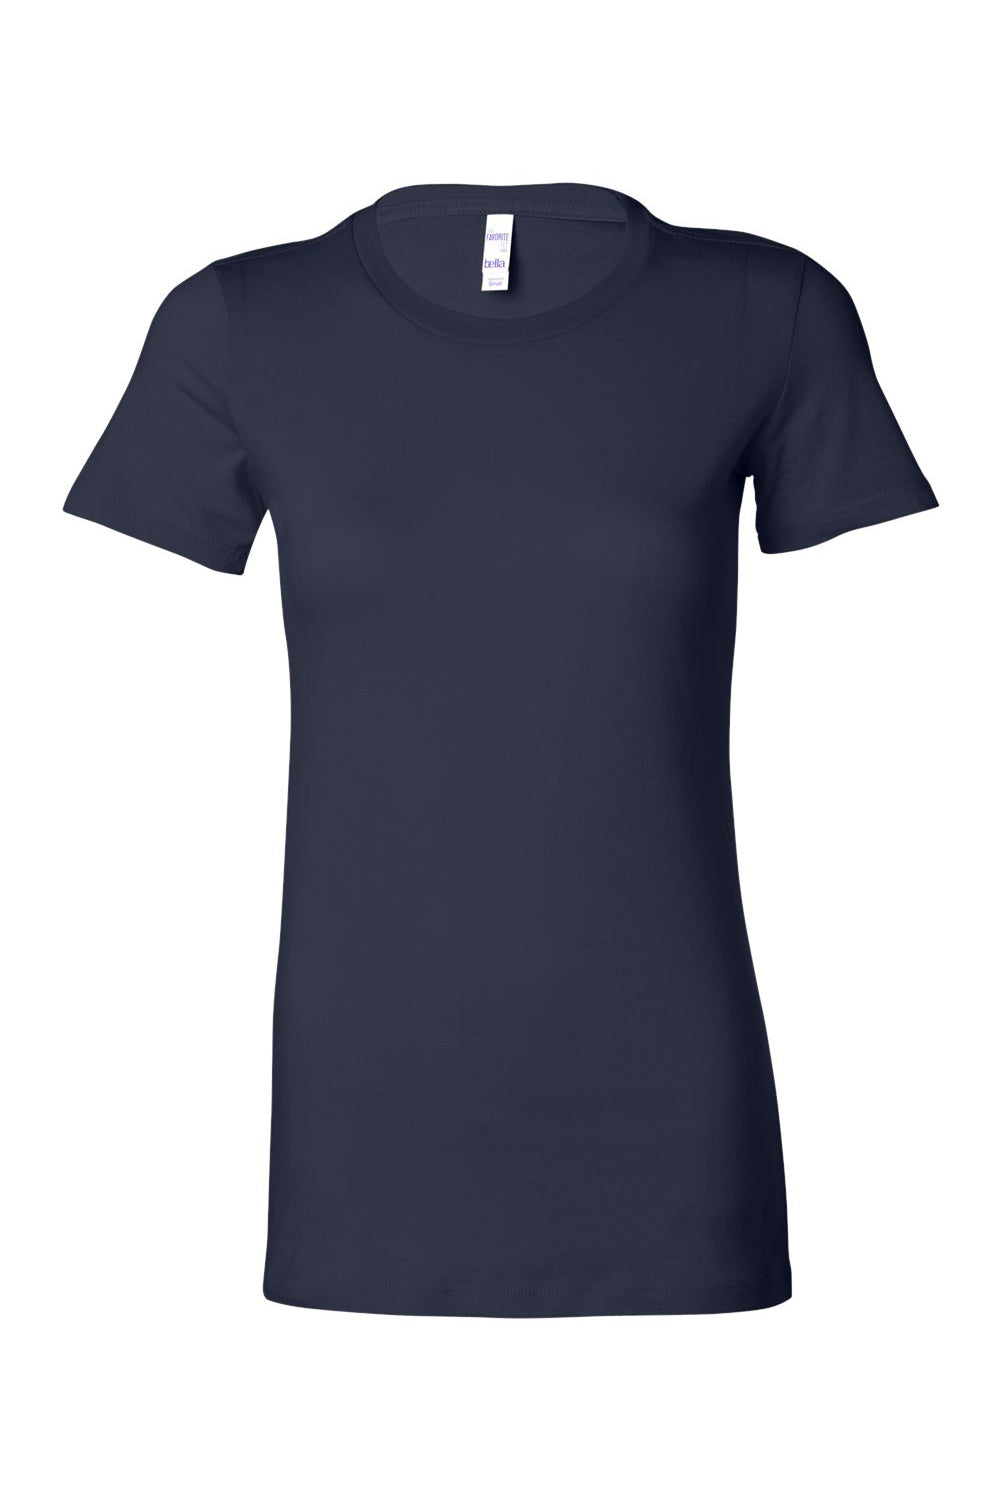 Bella + Canvas BC6004/6004 Womens The Favorite Short Sleeve Crewneck T-Shirt Navy Blue Flat Front